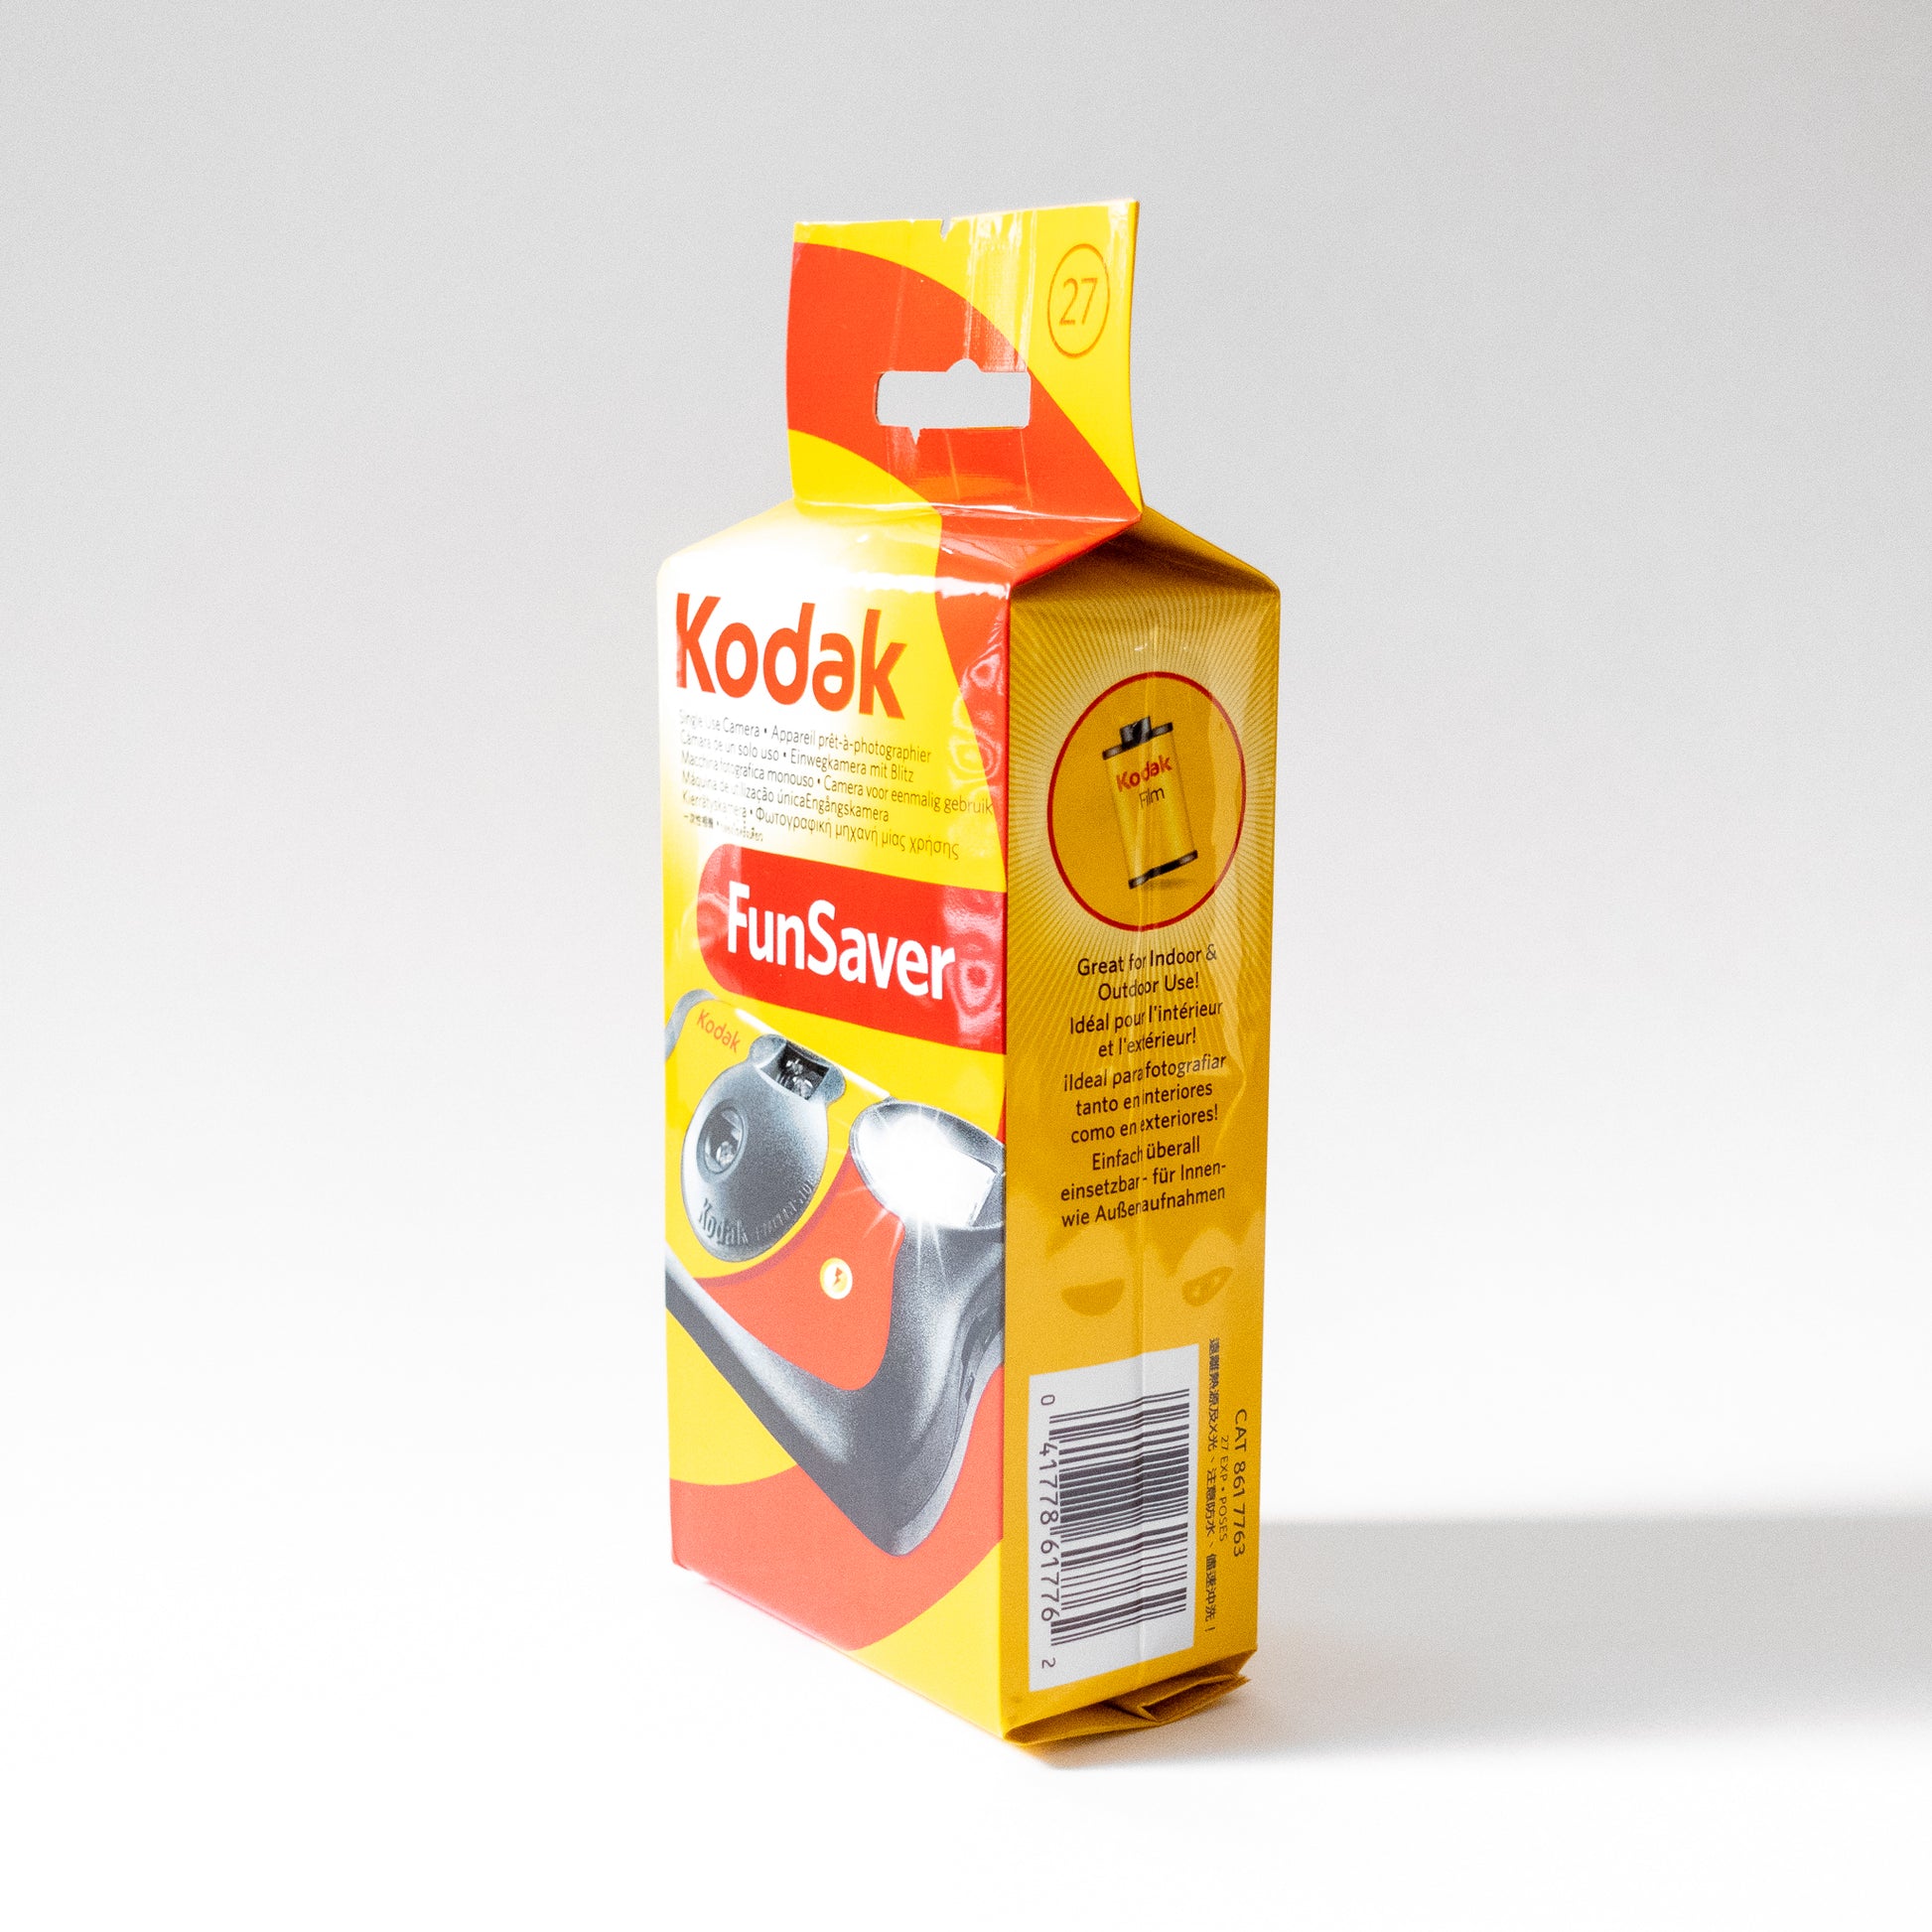 Kodak FunSaver with Flash - 27 Exp.